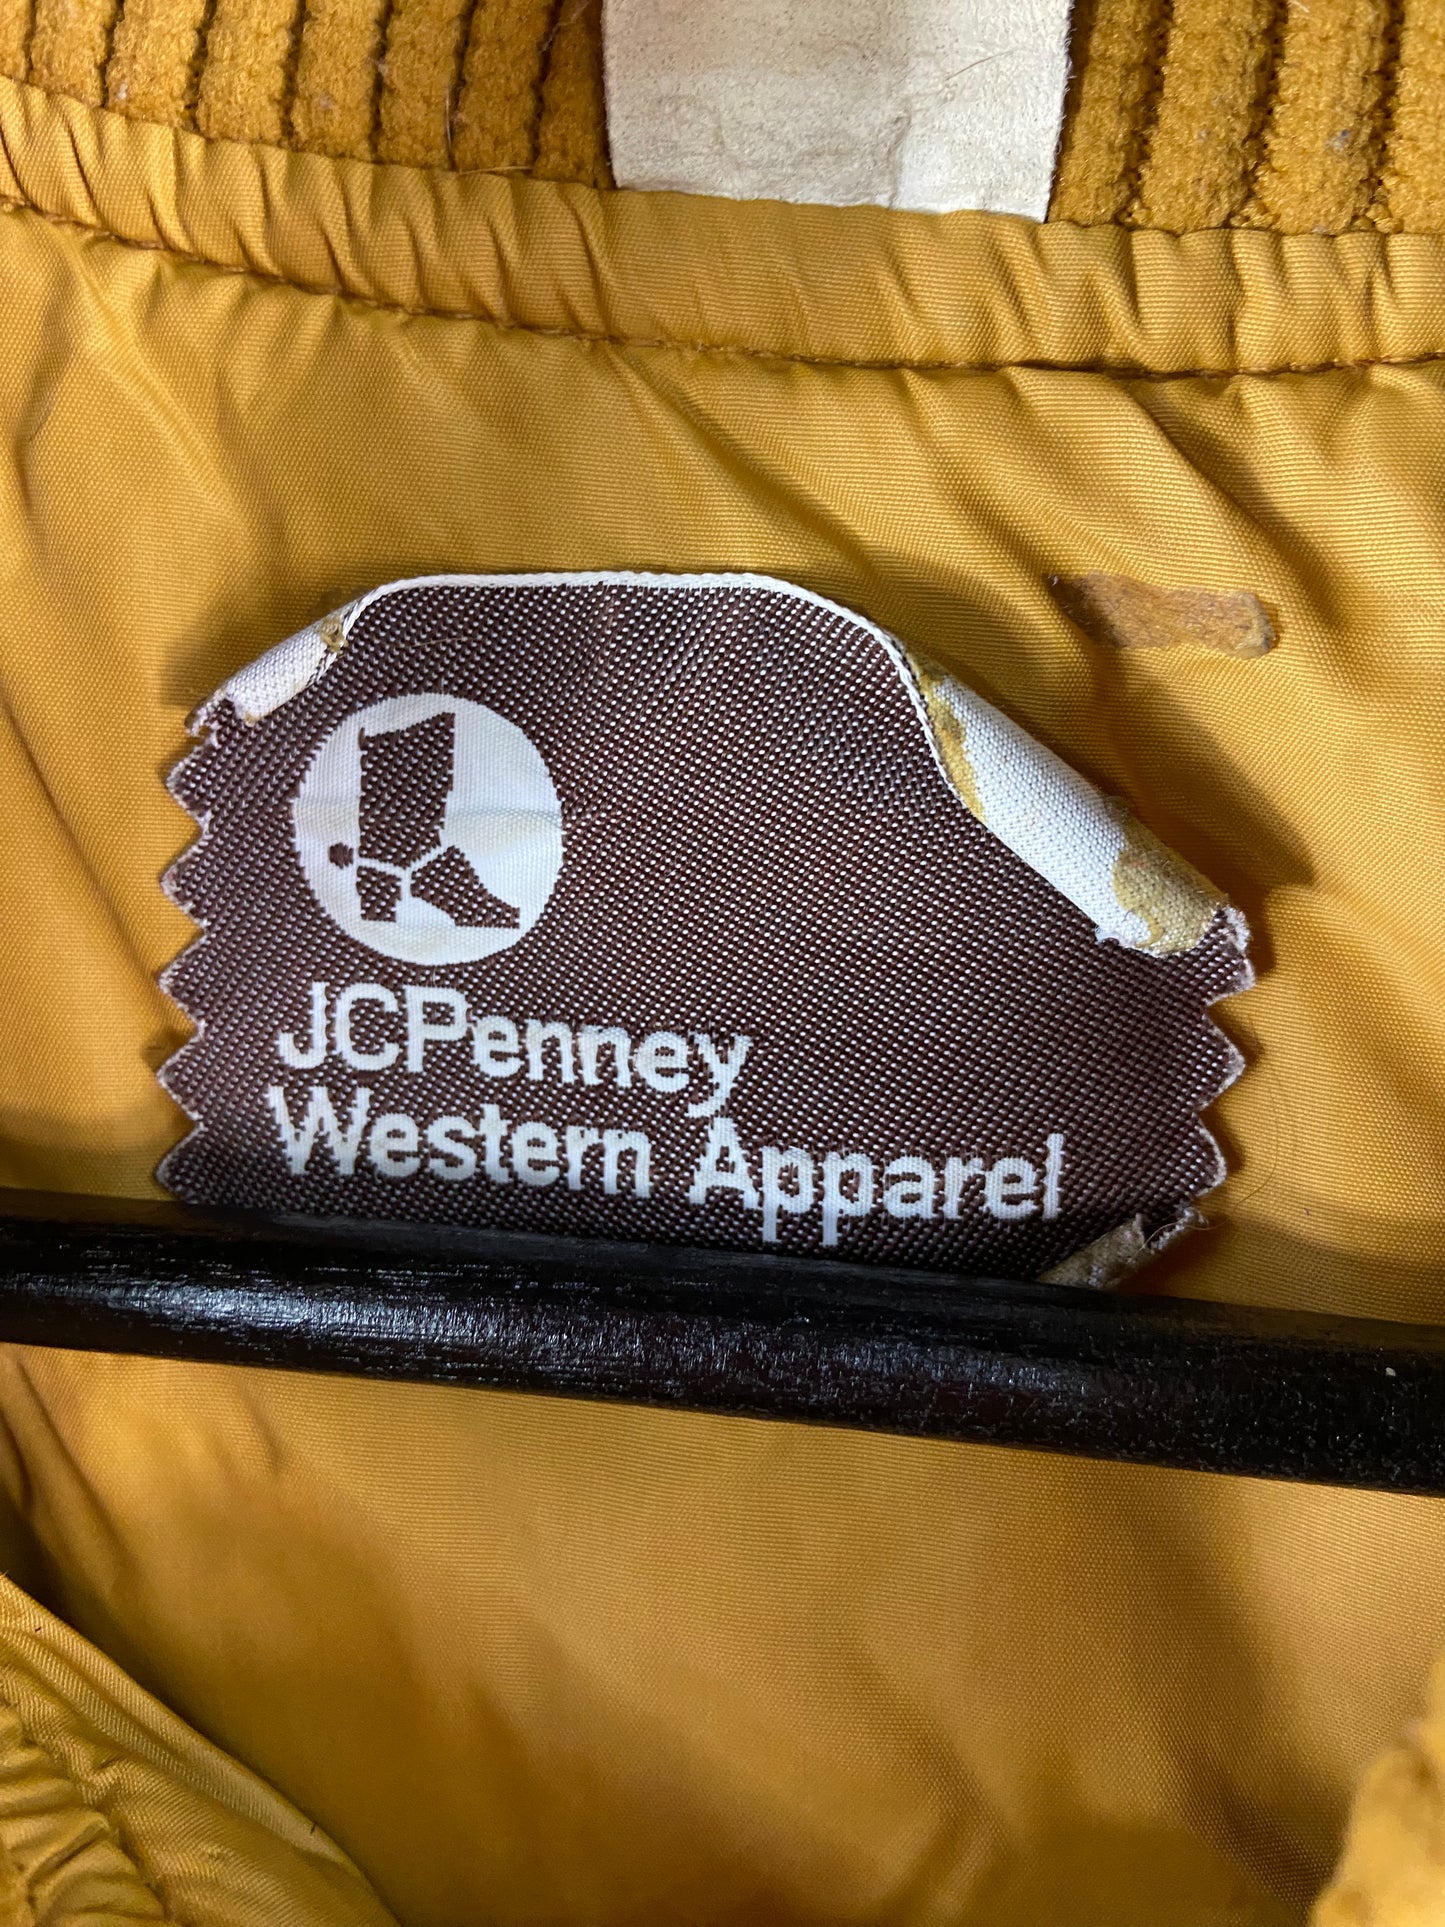 VTG JCPenney Western Apparel Mustard Bubble Vest Sz L